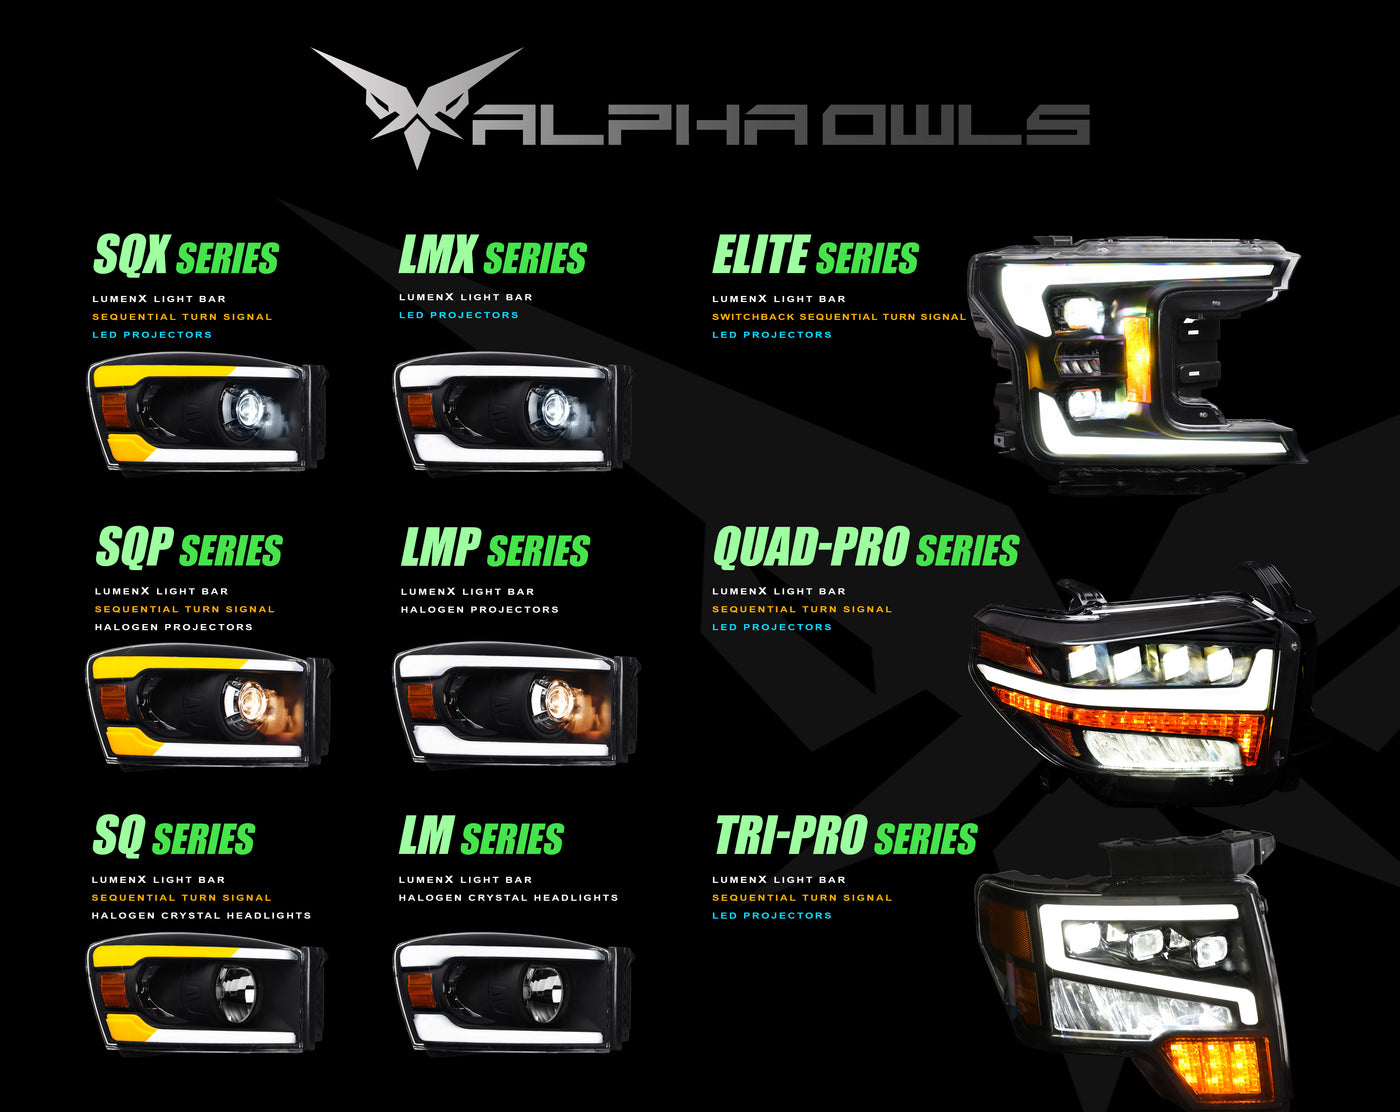 Alpha Owls Headlights, Alpha Owls Dodge Headlights, Dodge 2006-2008 Headlights, Dodge Ram 1500 Headlights, Headlights, Chrome housing Headlights